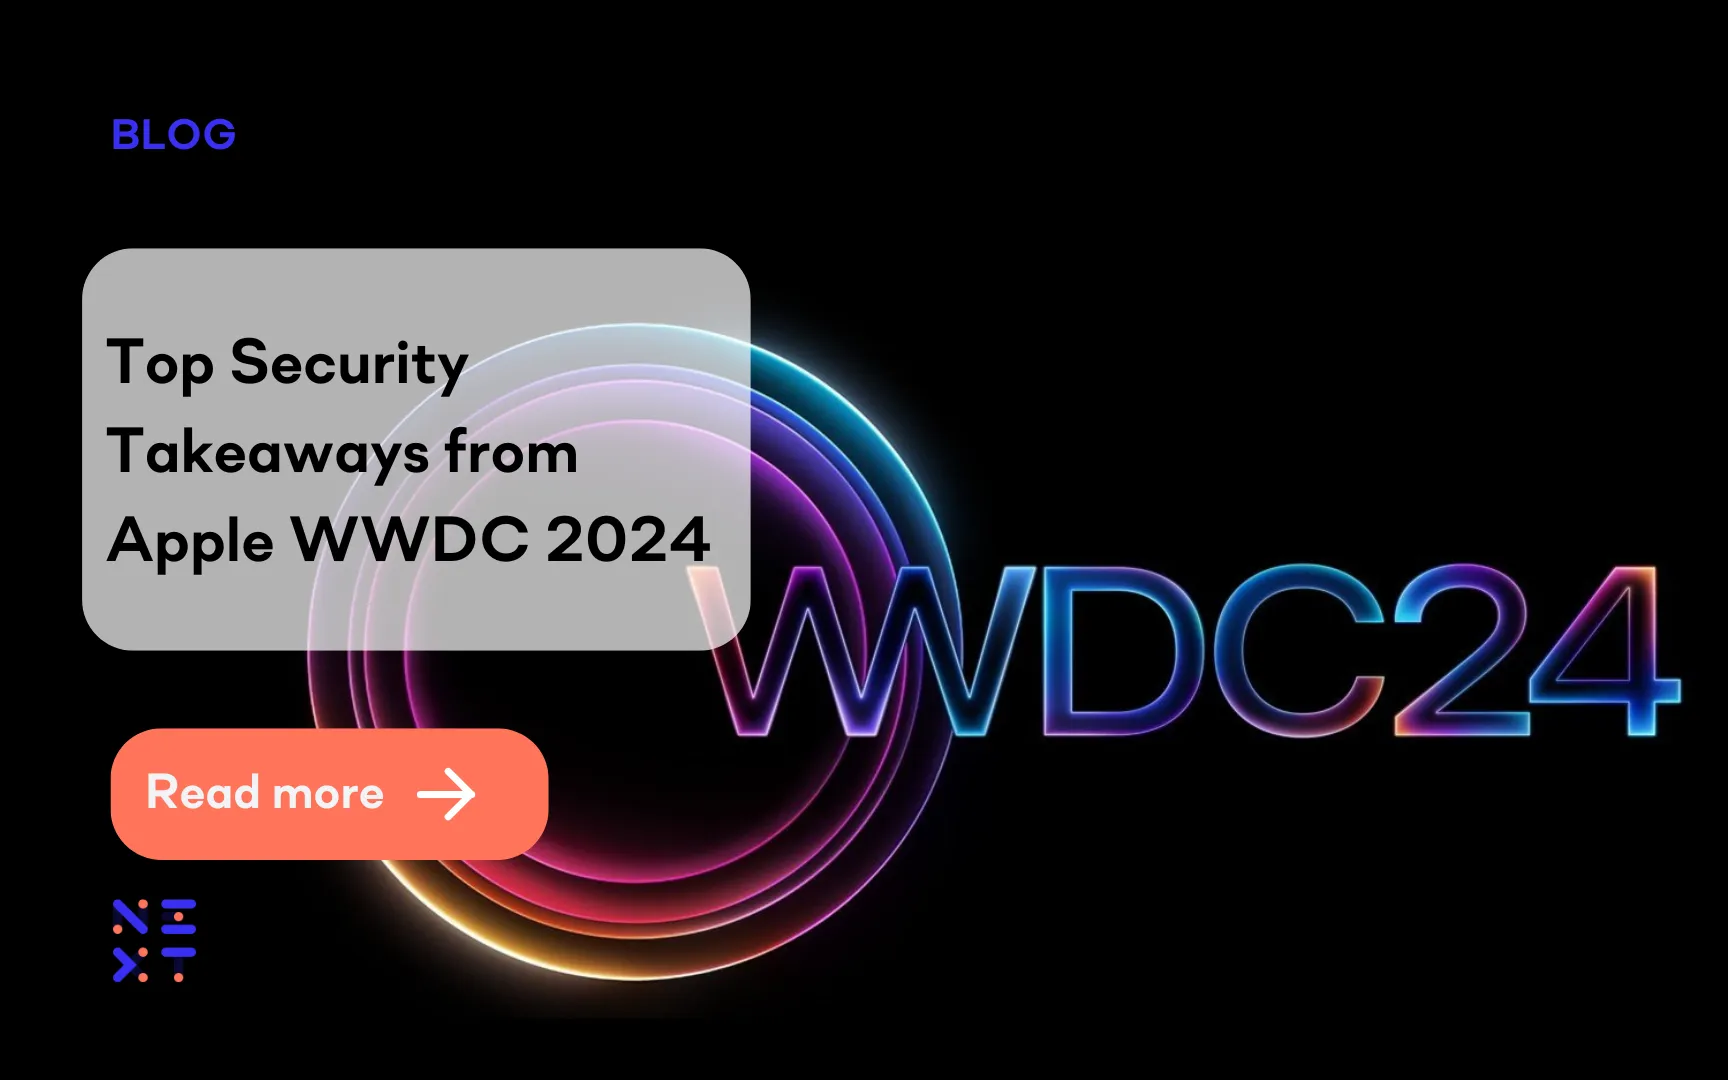 Top security takeaways from Apple WWDC 2024